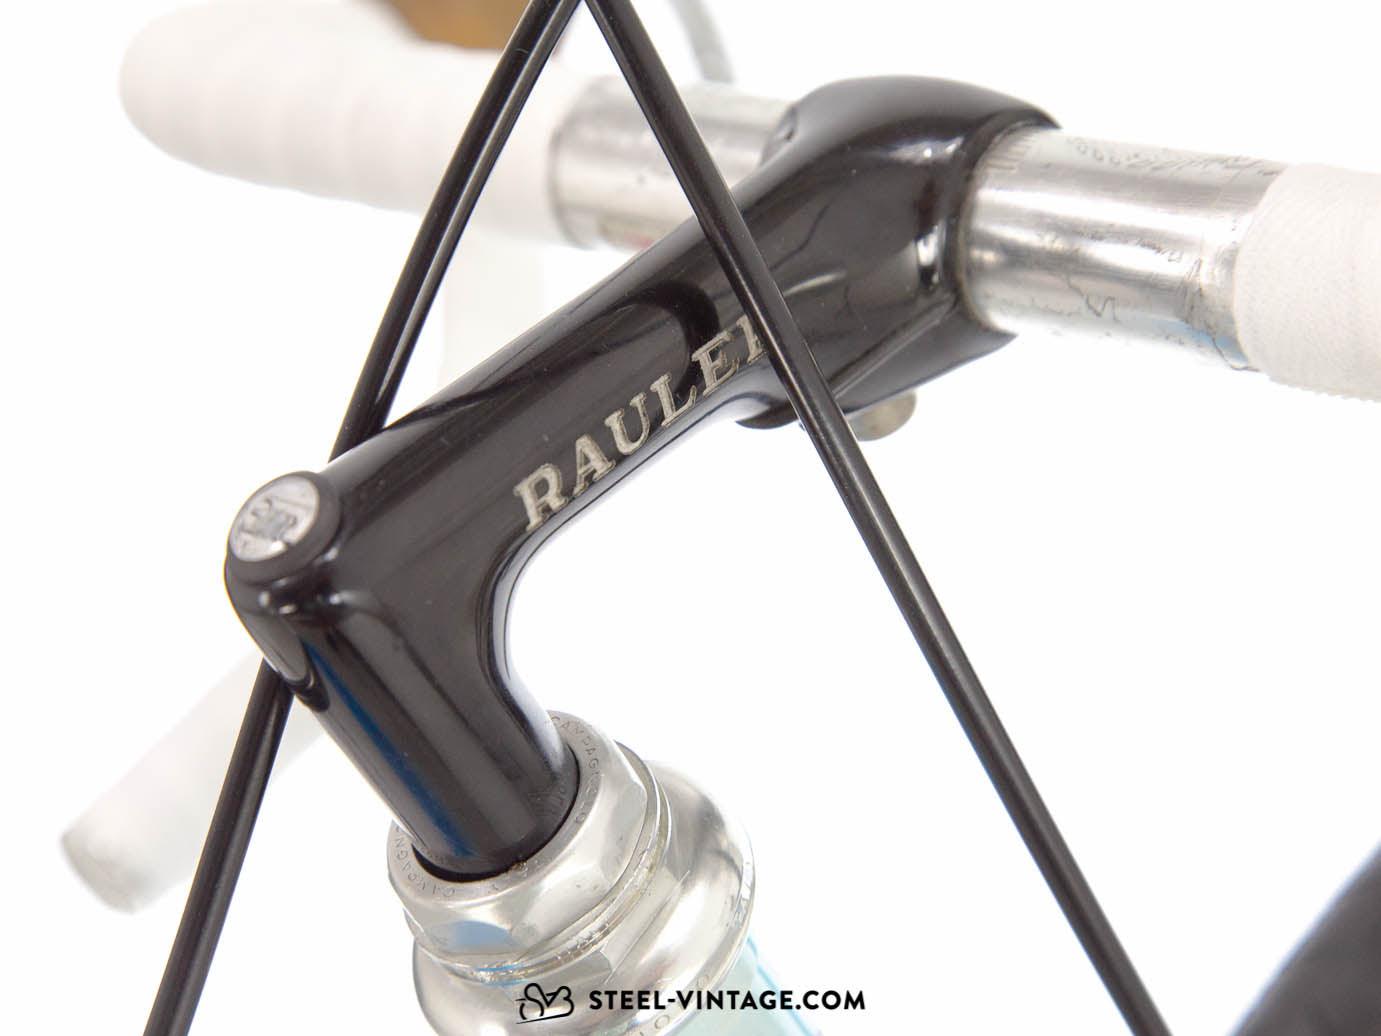 Rauler Record SLX Classic Road Bike 1980s - Steel Vintage Bikes